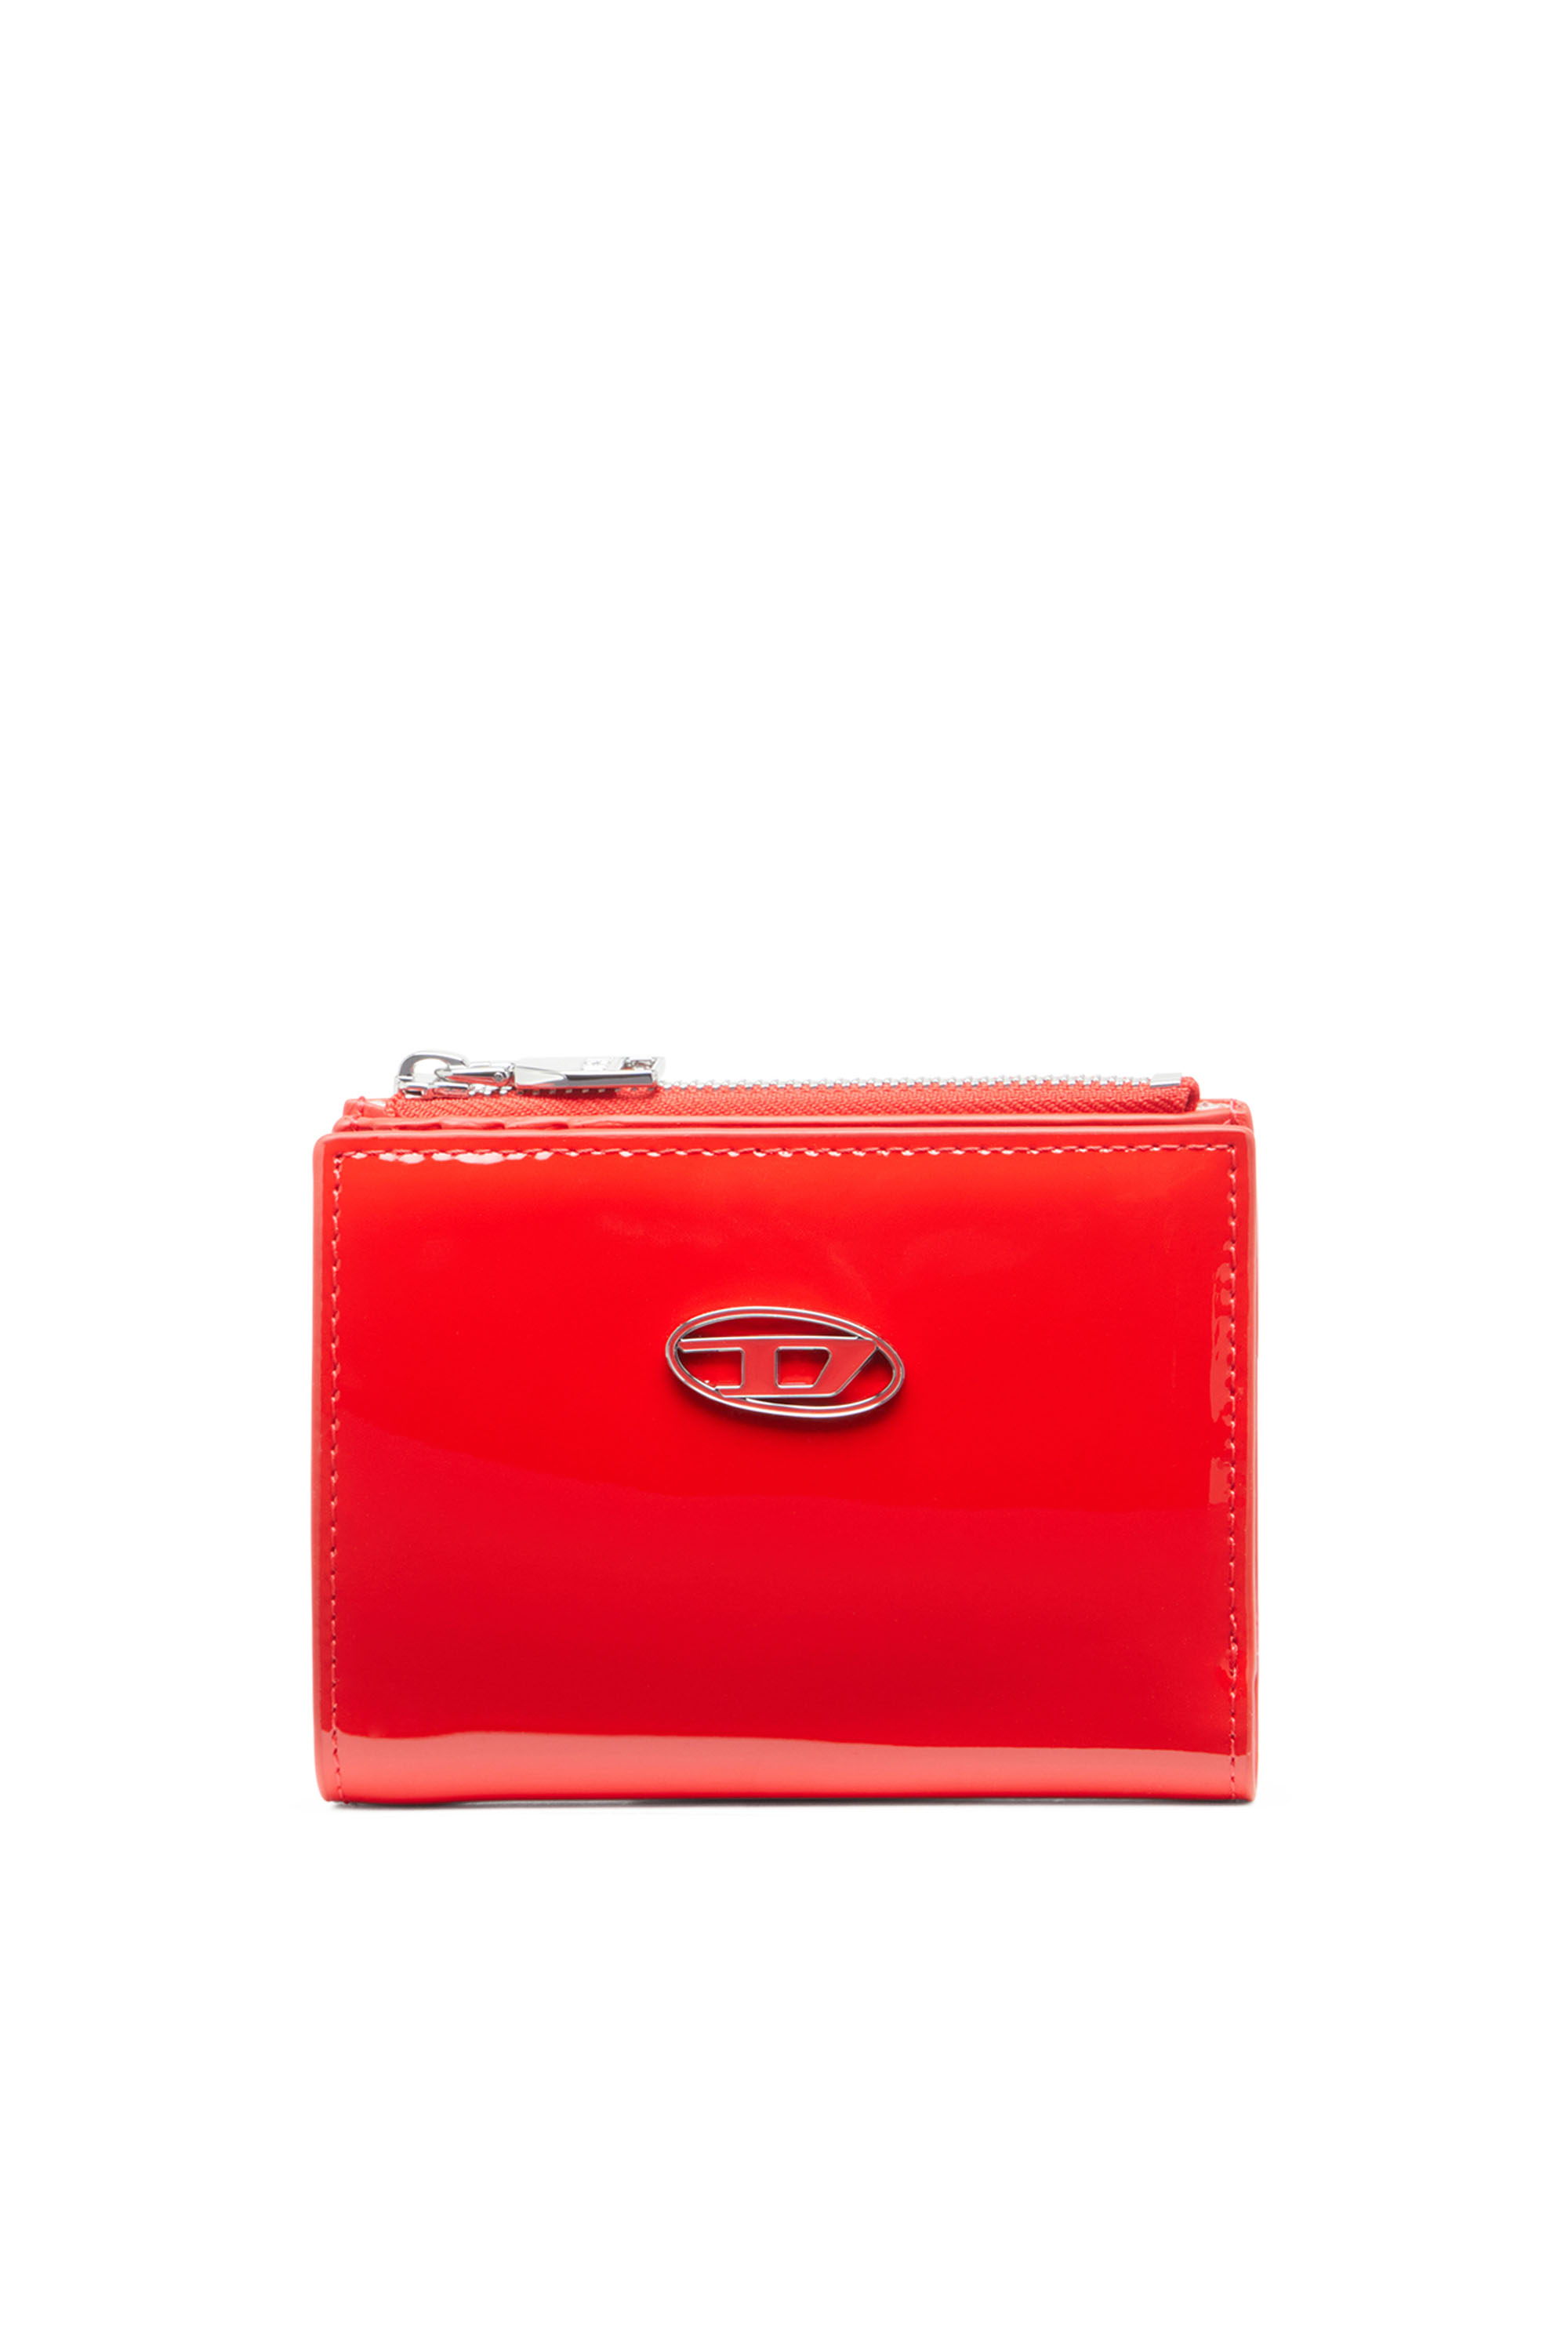 Diesel - PLAY BI-FOLD ZIP II, Female Small wallet in glossy leather in レッド - Image 1